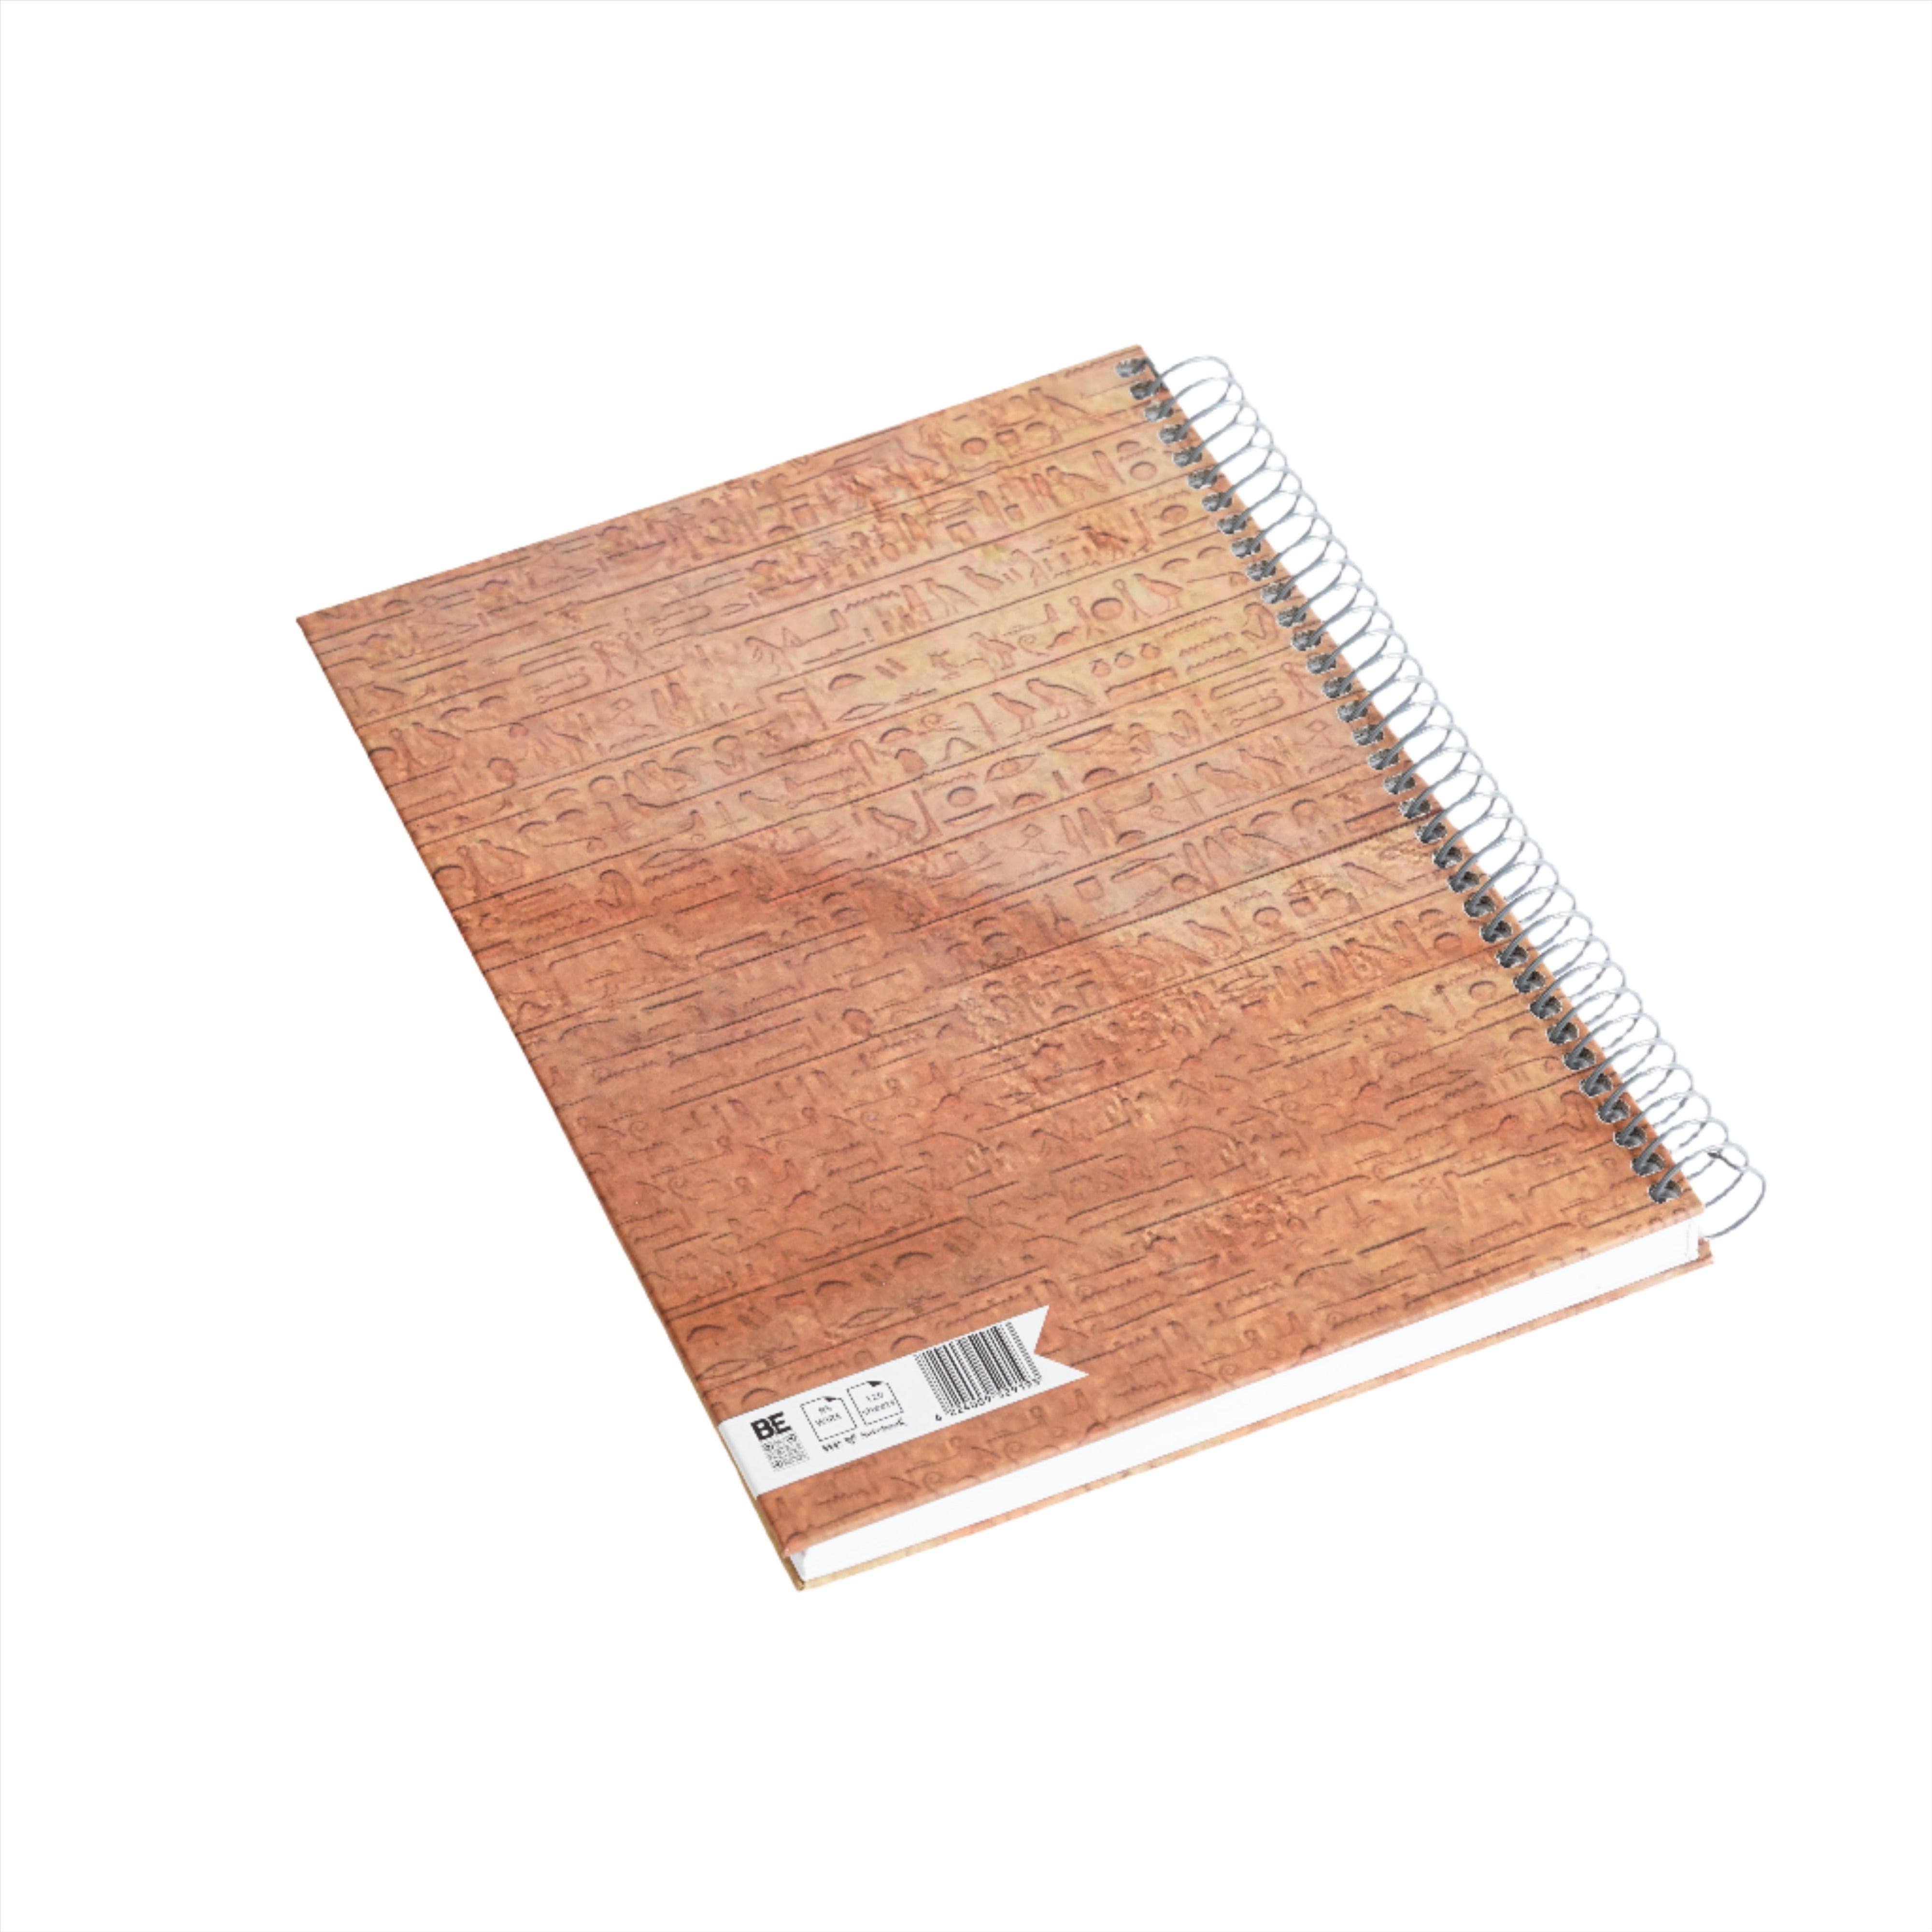 2BE Spiral Notebook B5 200 sheets - Tutankh amun